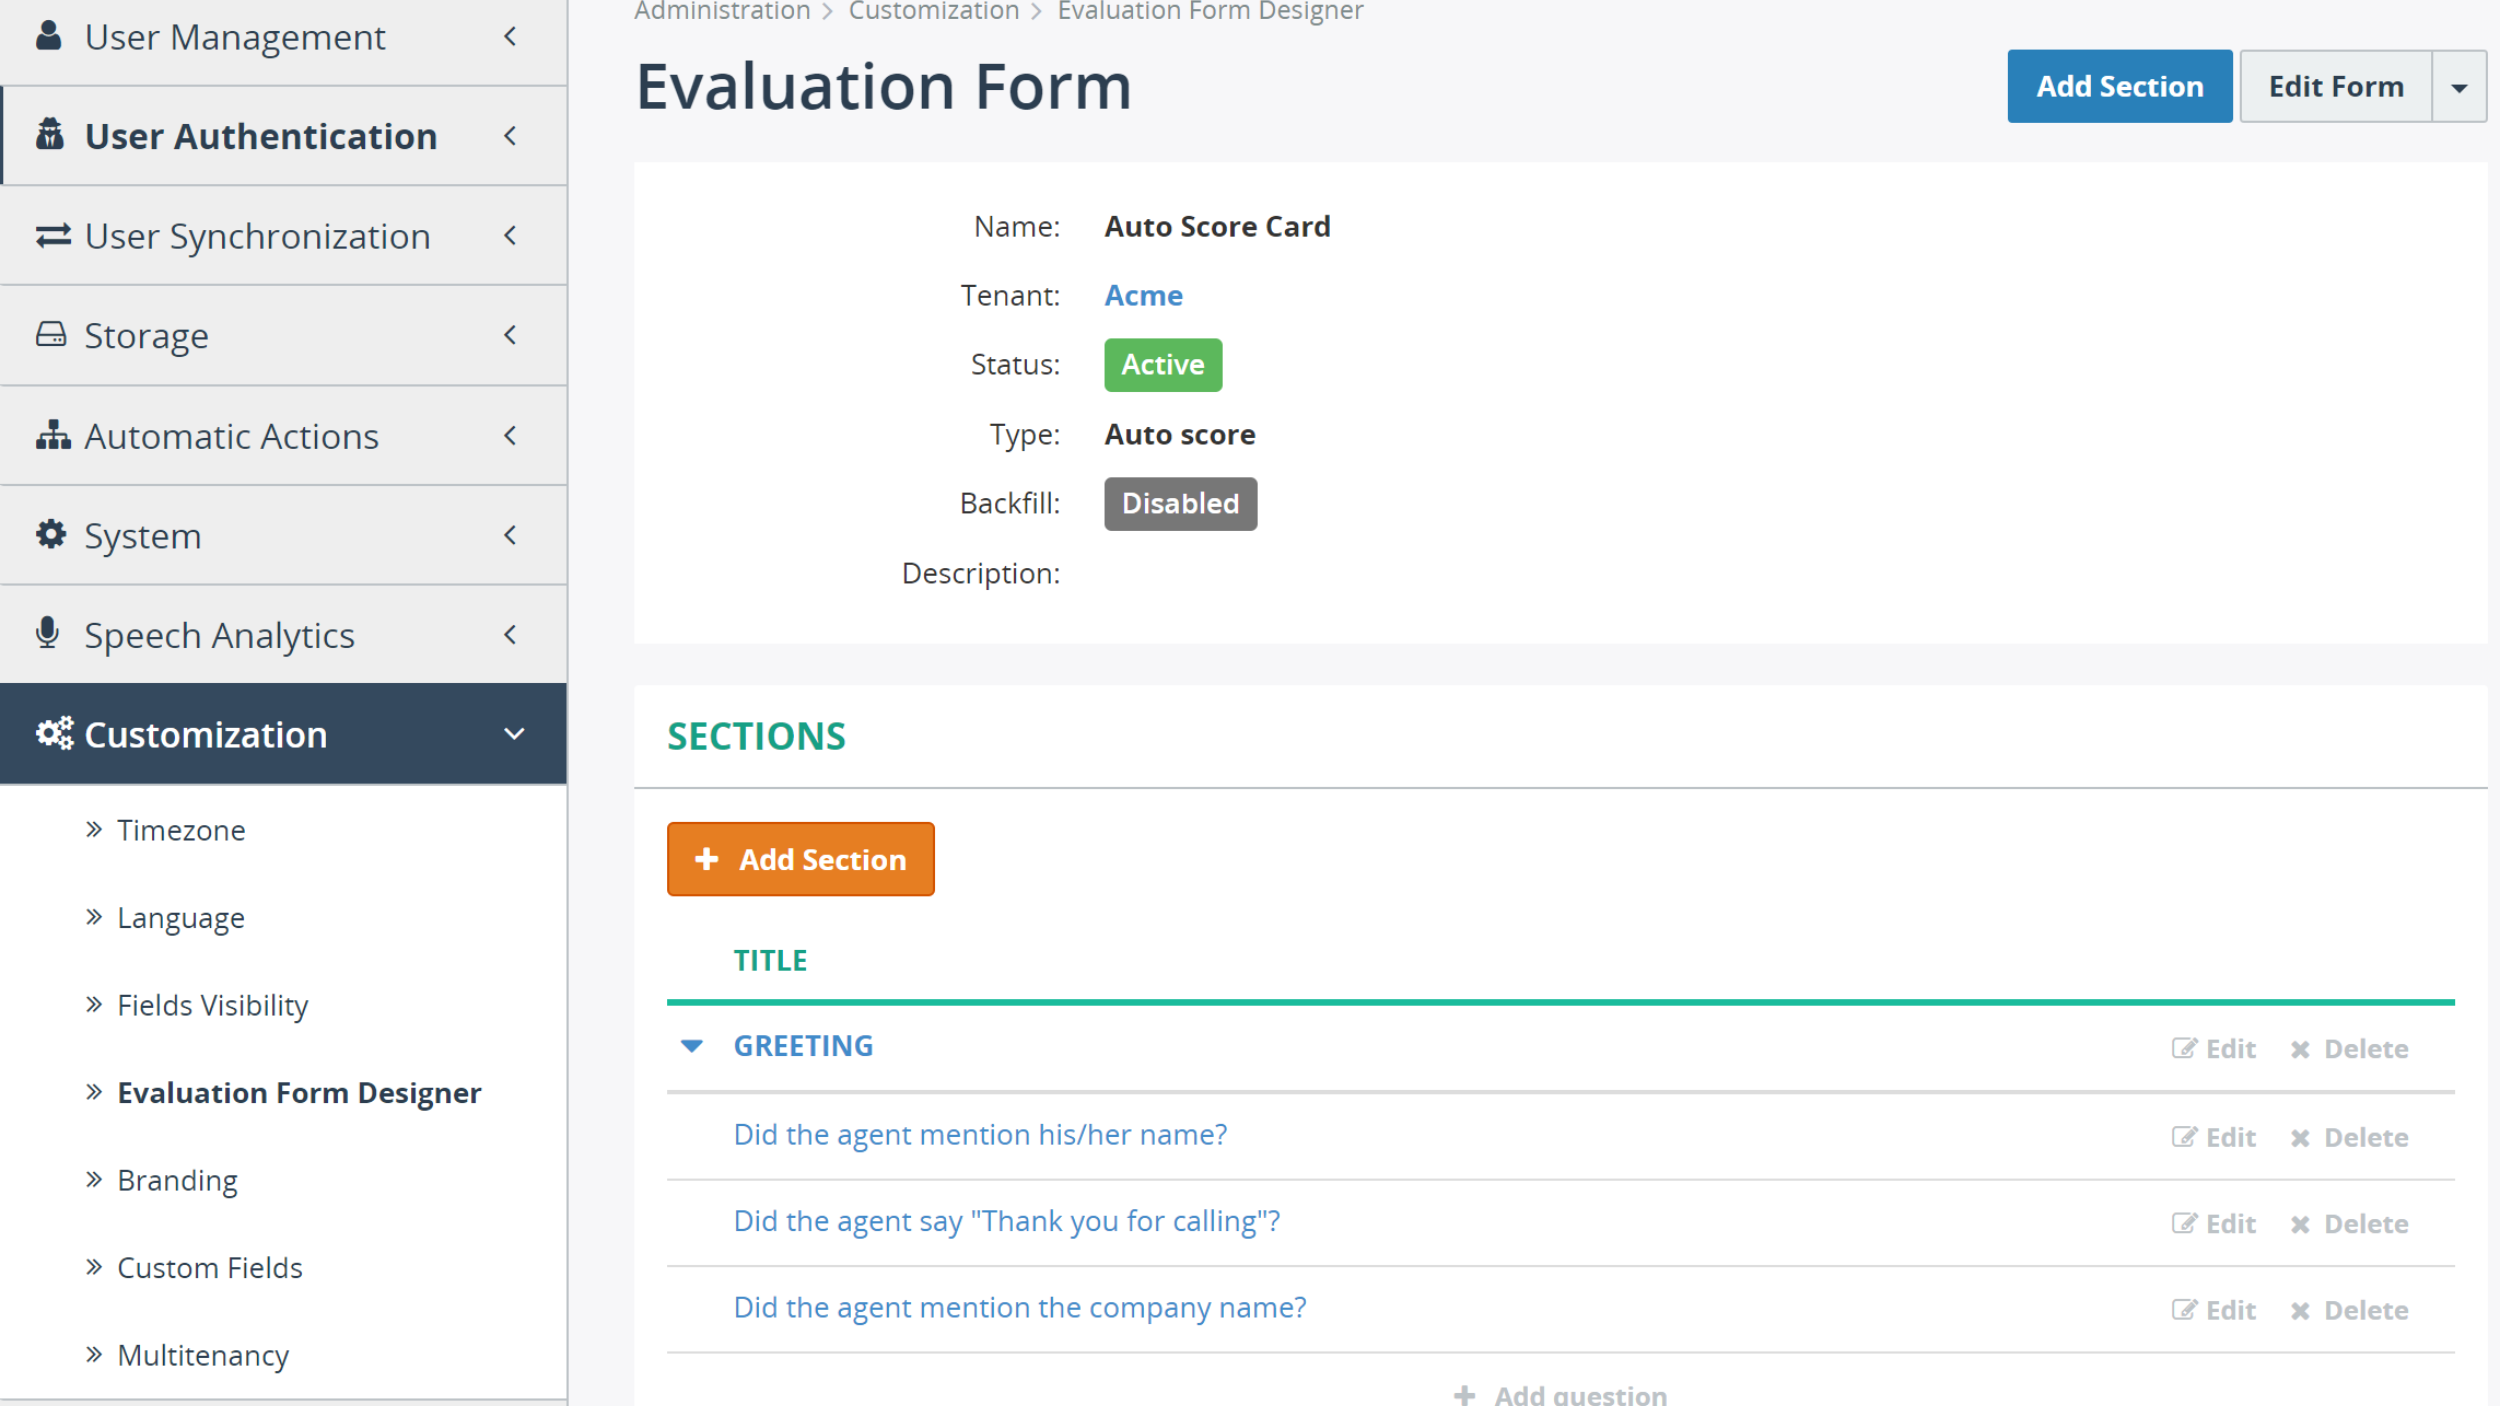 Evaluation Form Designer_Admin View